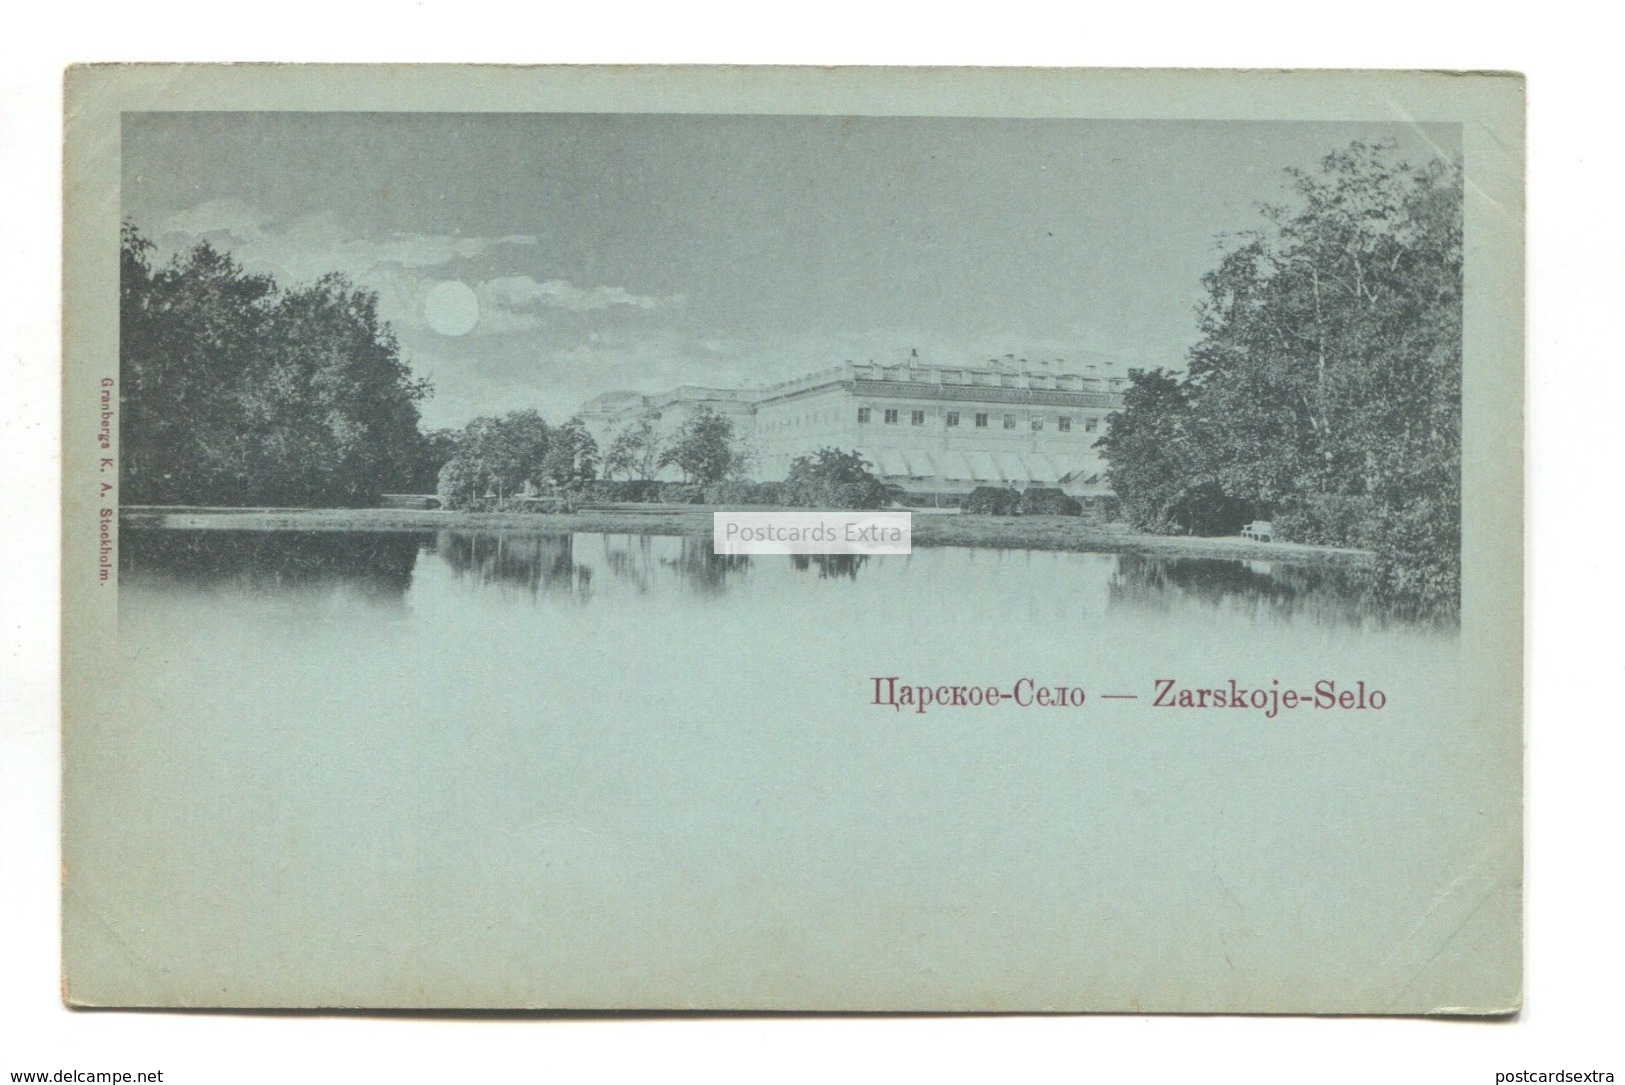 Zarskoje-Selo - Palace Or Similar - Early Russia Postcard - Russia